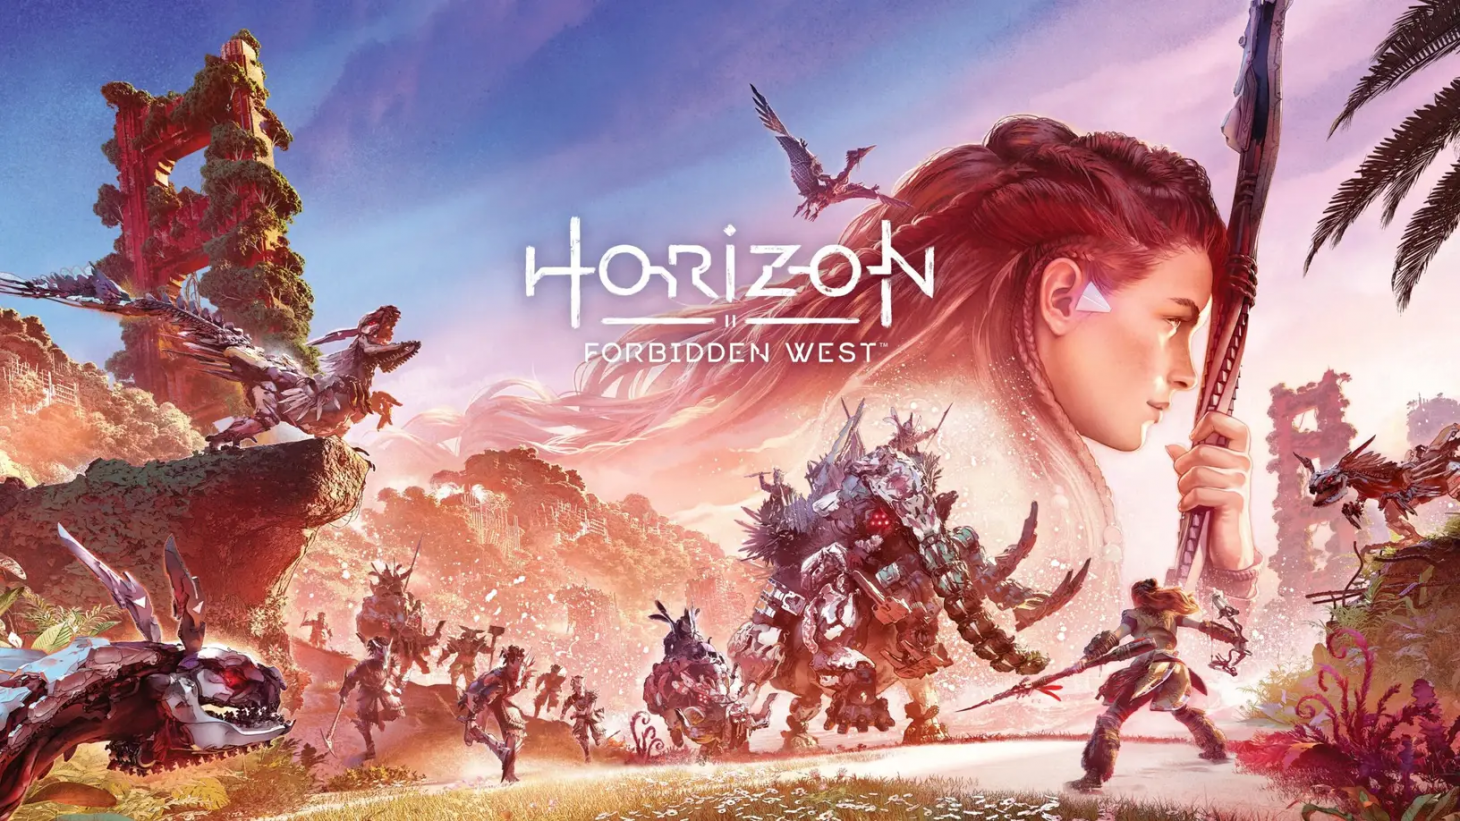 Metacritic improving moderation after abusive, disrespectful Horizon  Forbidden West Burning Shores reviews